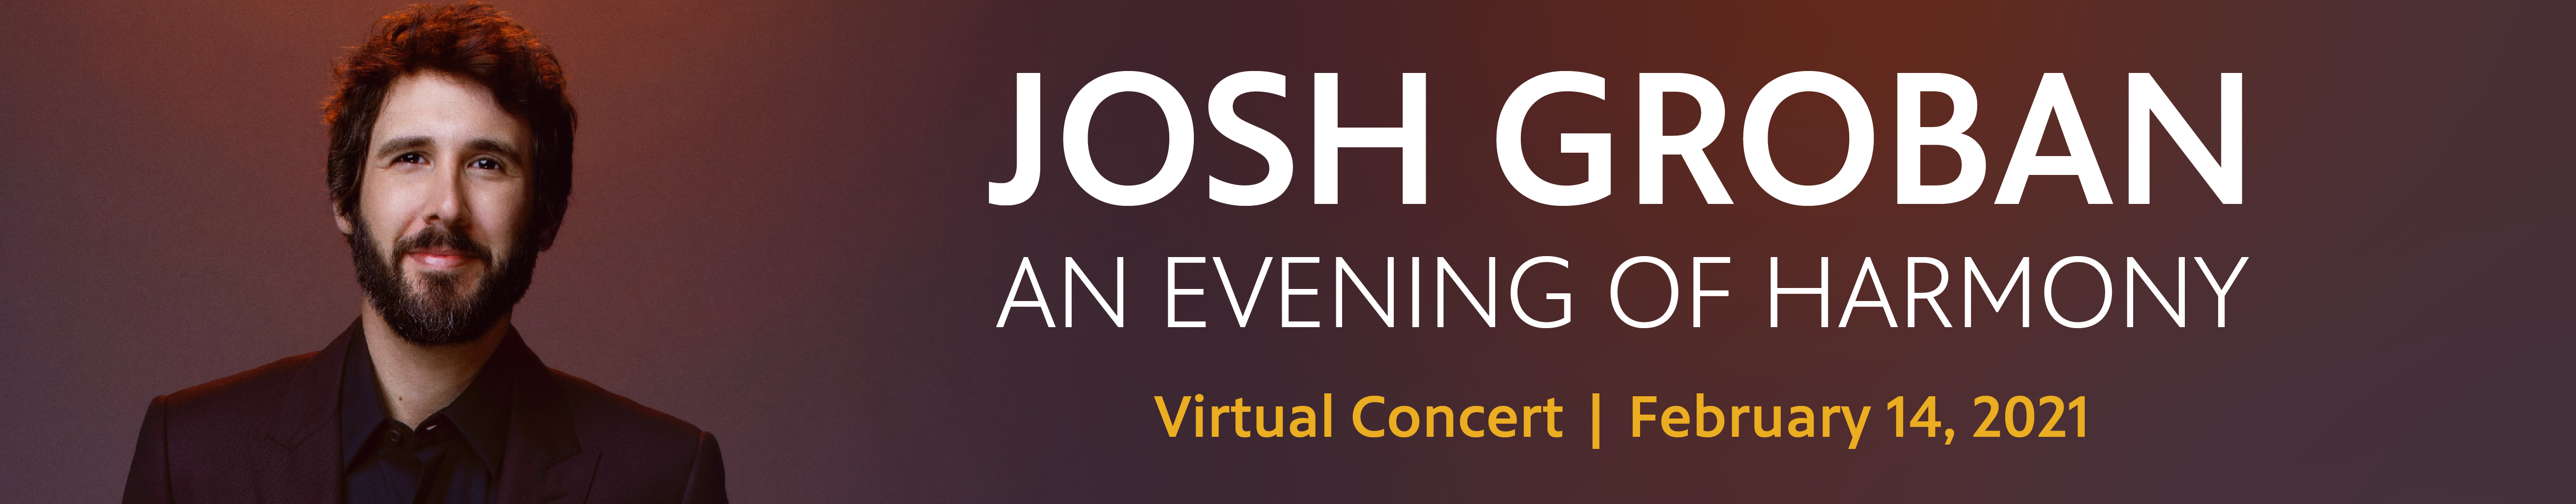 Josh Groban - An Evening of Harmony